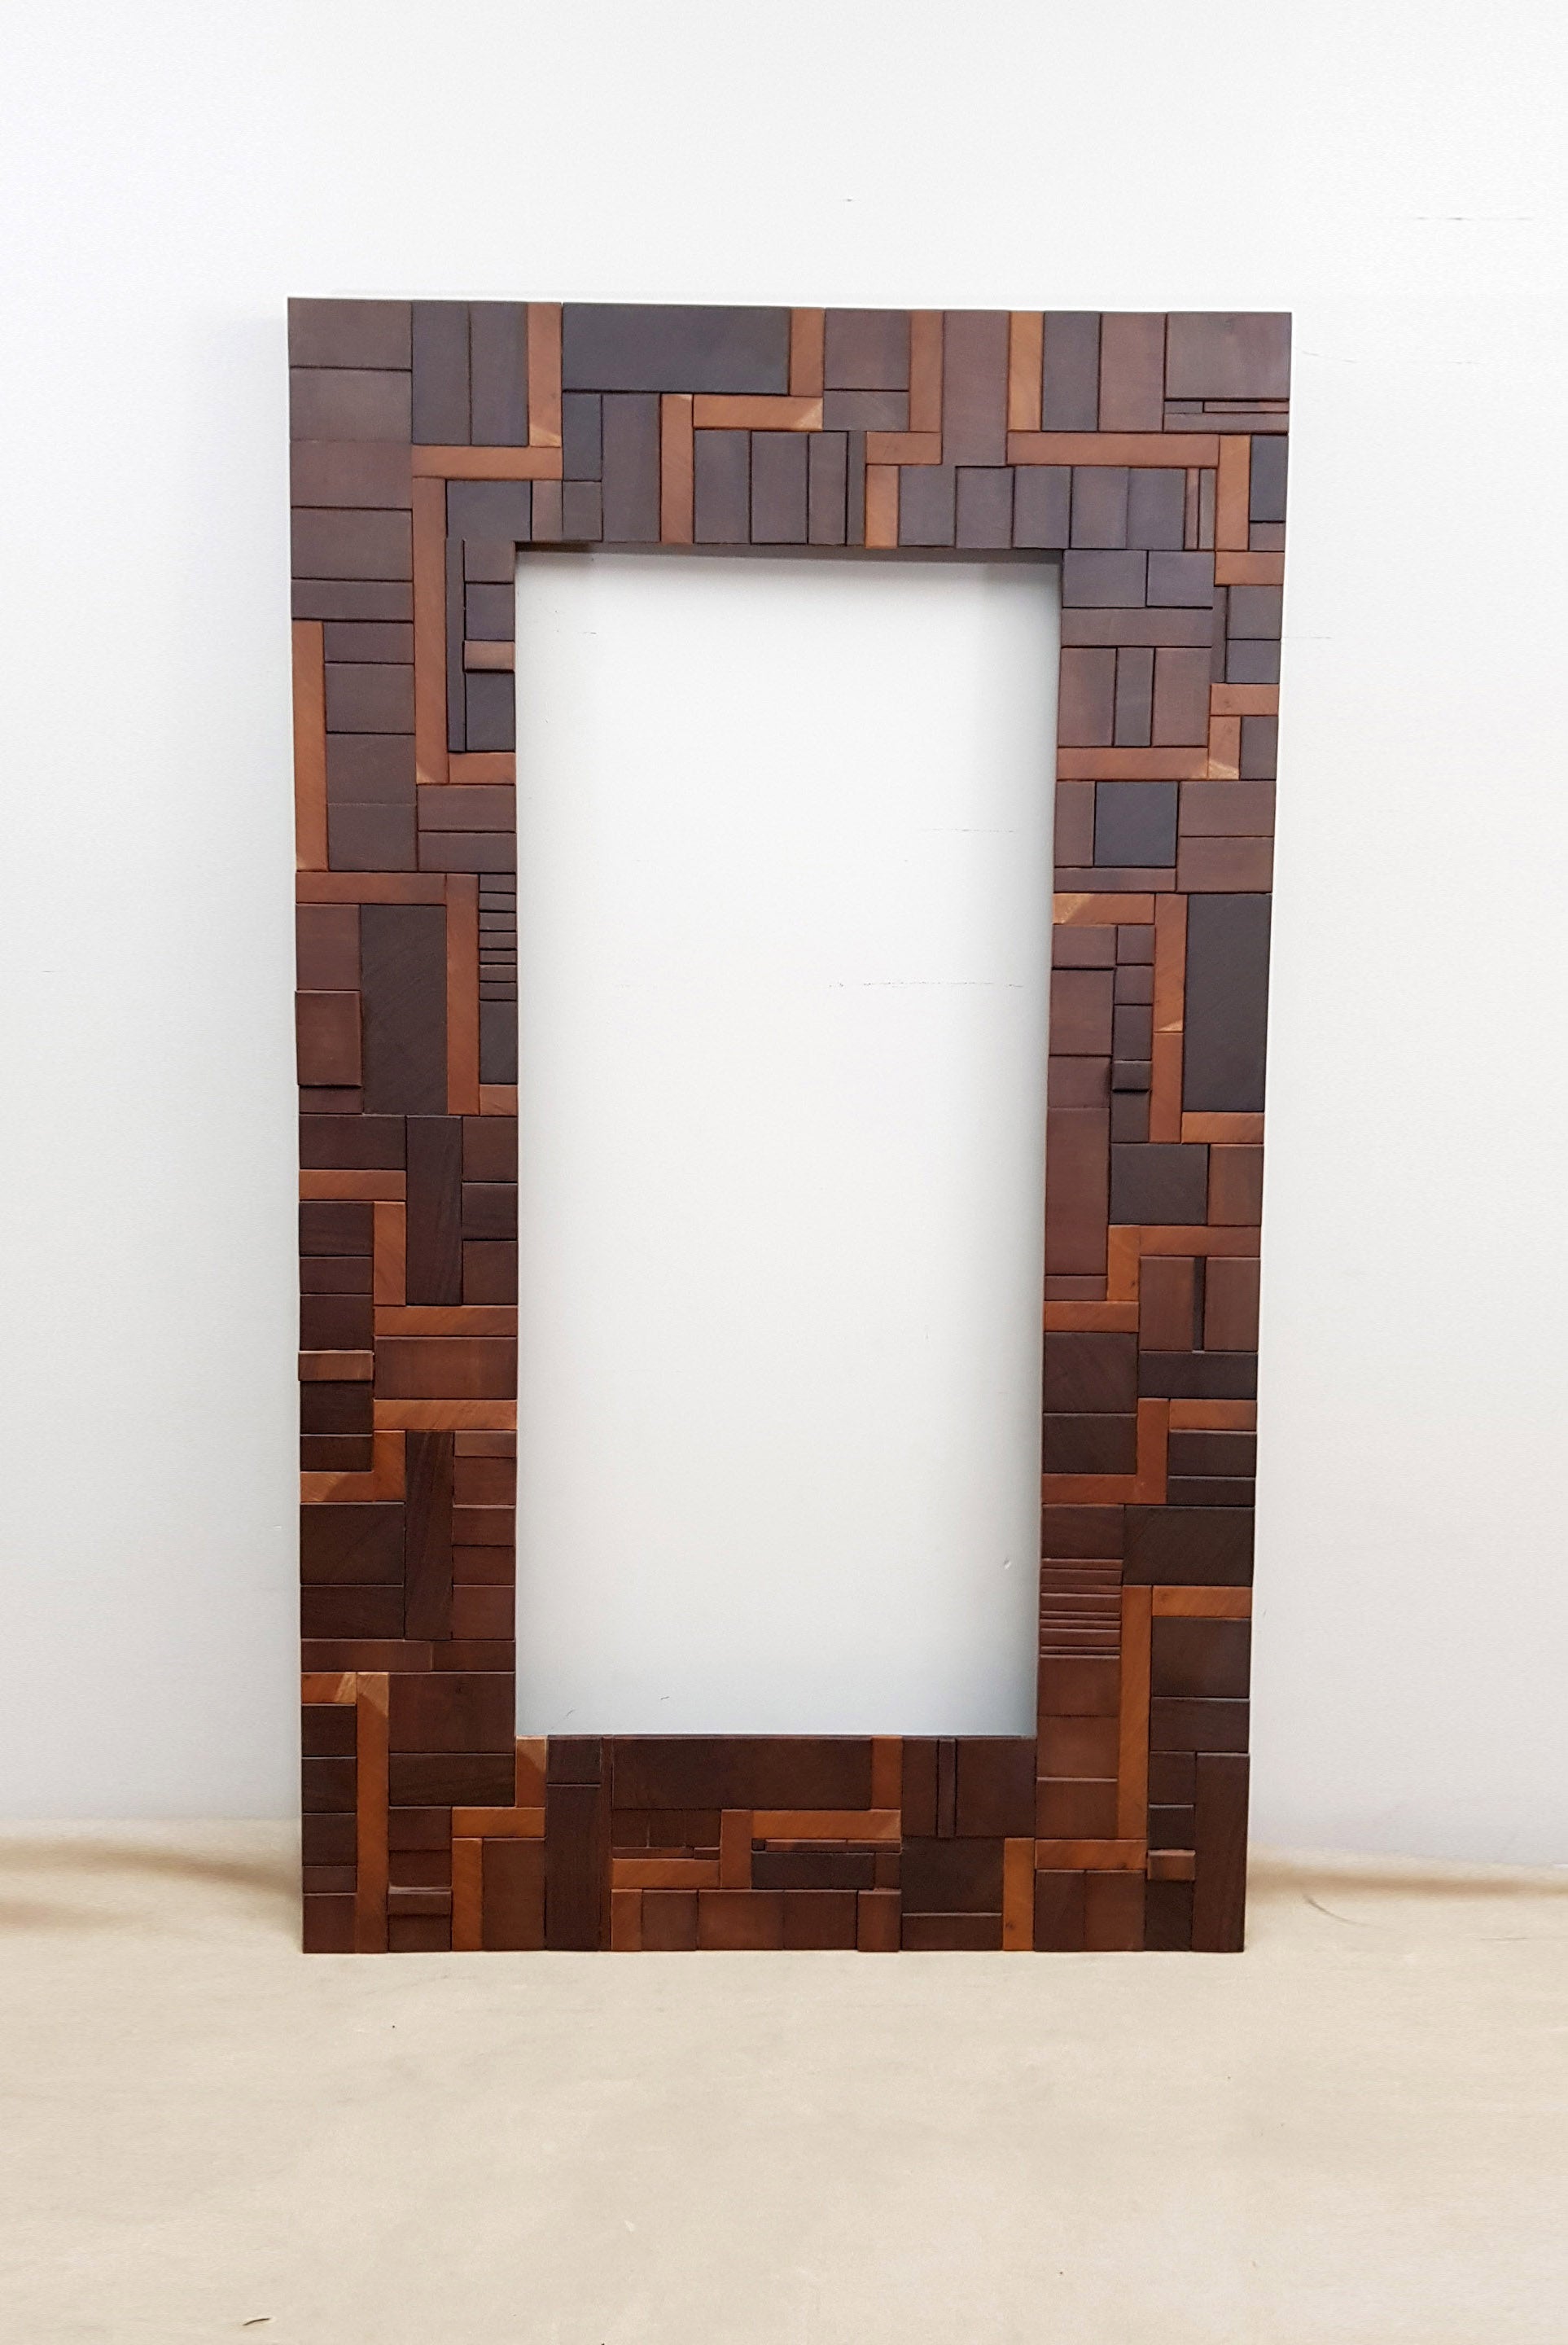 Statement artwork mirror frame in end grain mahogany